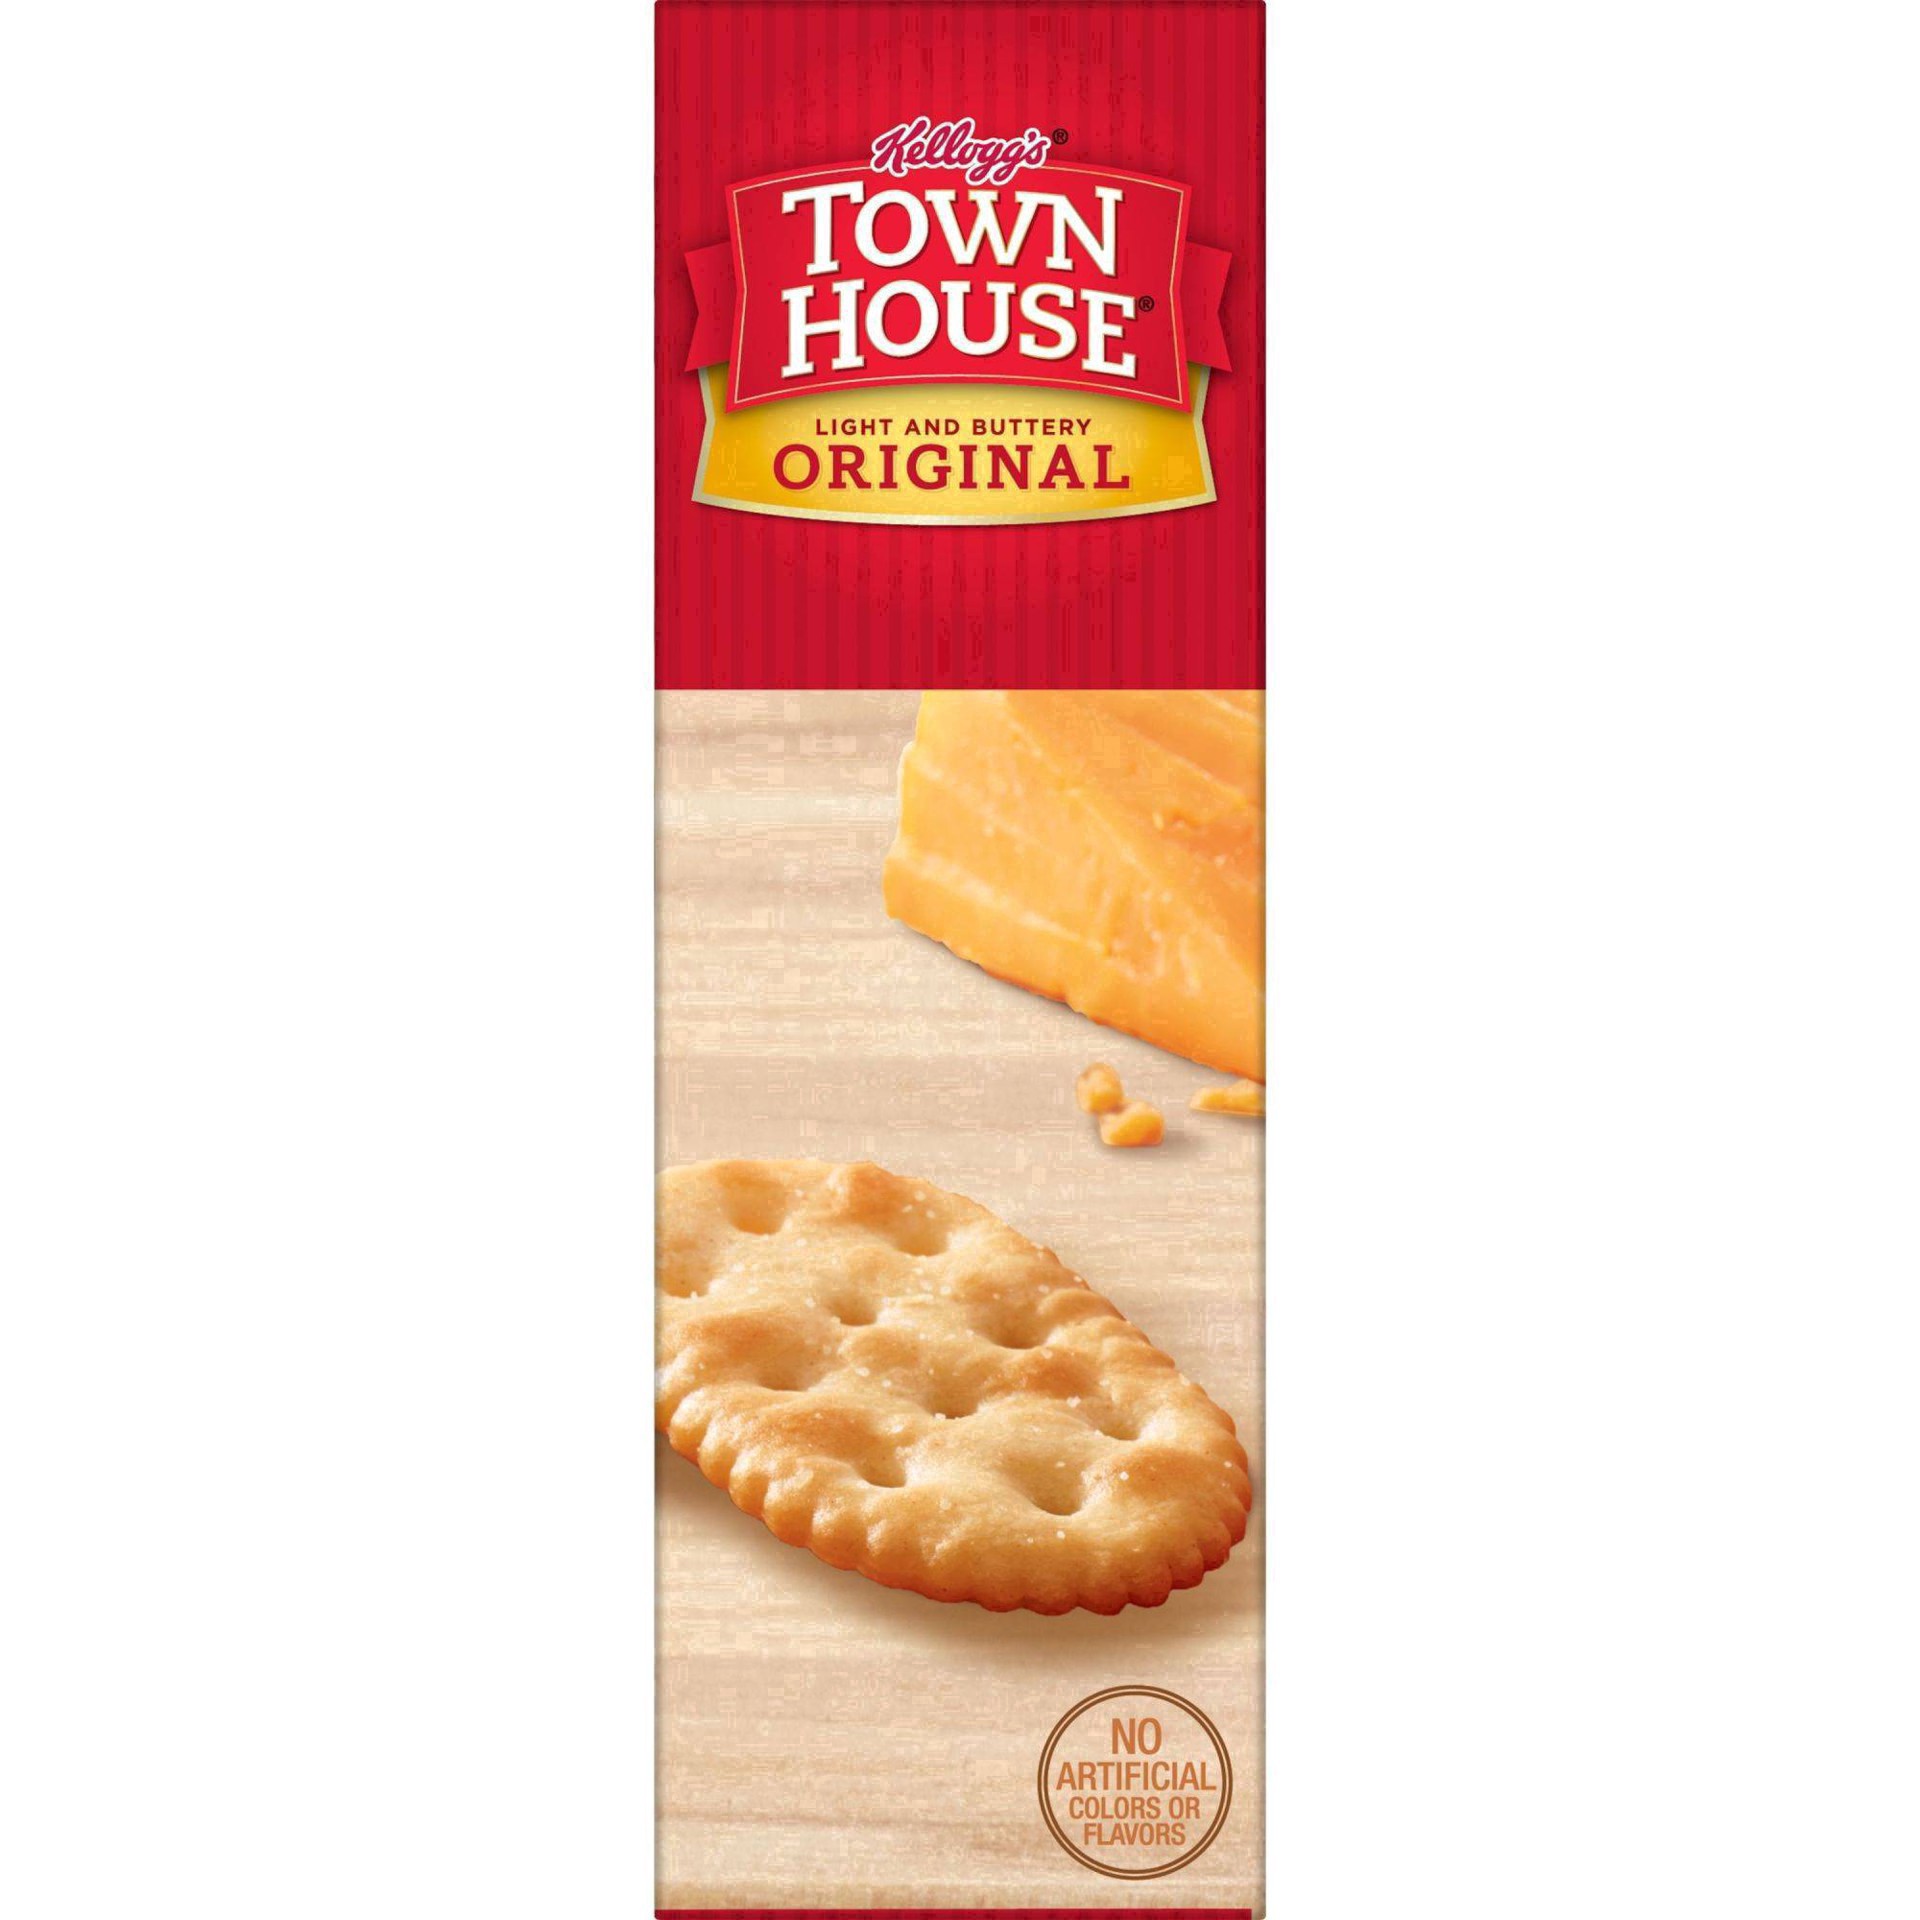 slide 67 of 101, Town House Kellogg's Town House Original Snack Crackers - 13.8oz, 13.8 oz